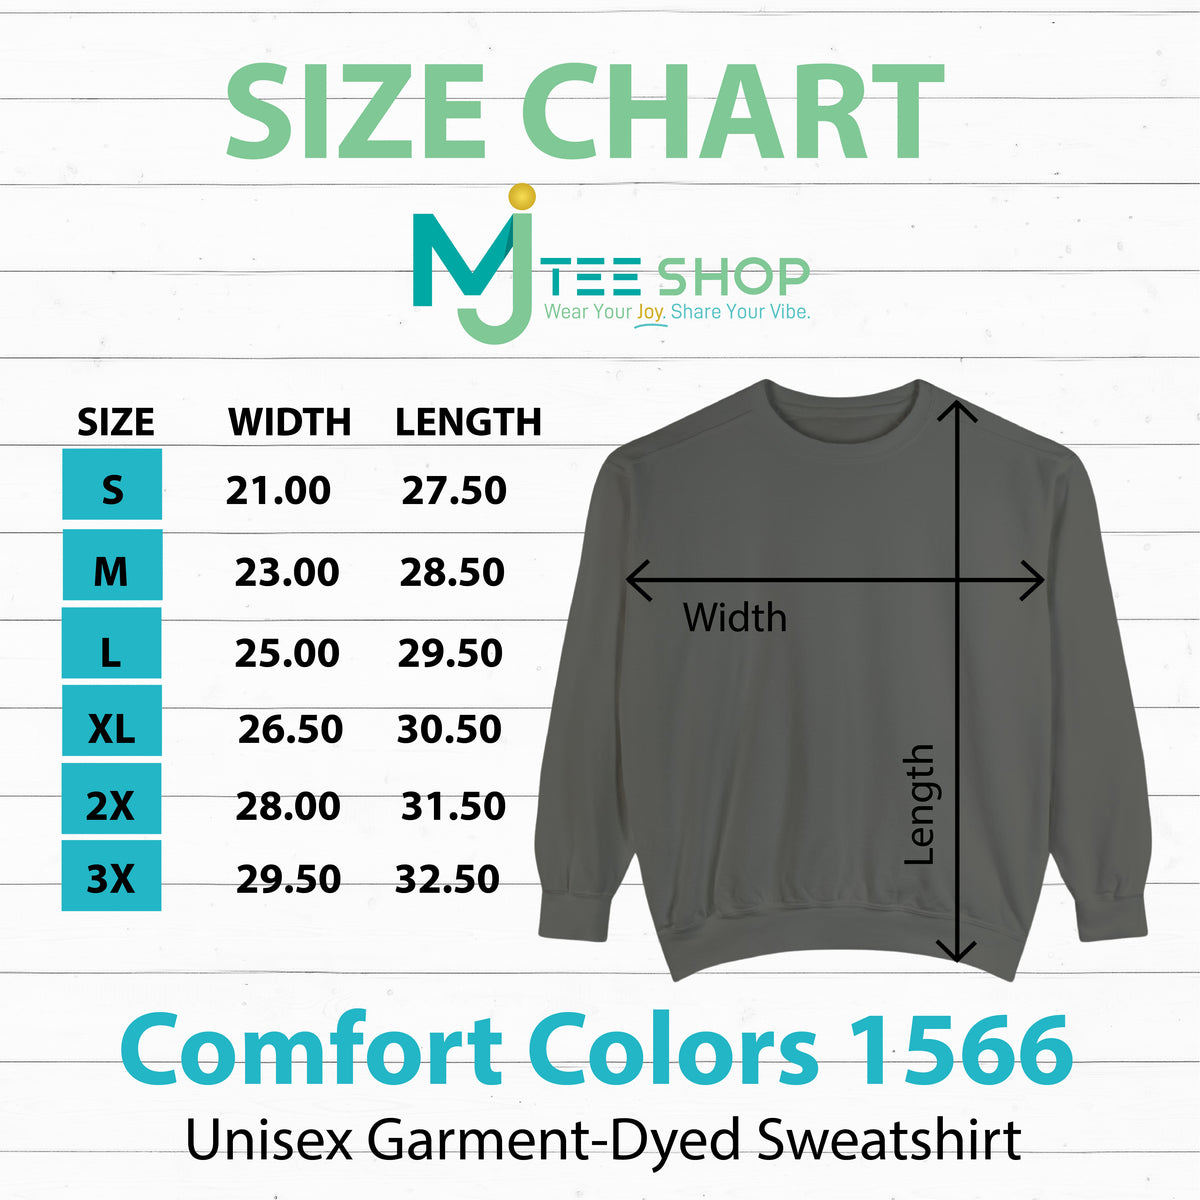 a sweatshirt measurements chart for a men's sweatshirt